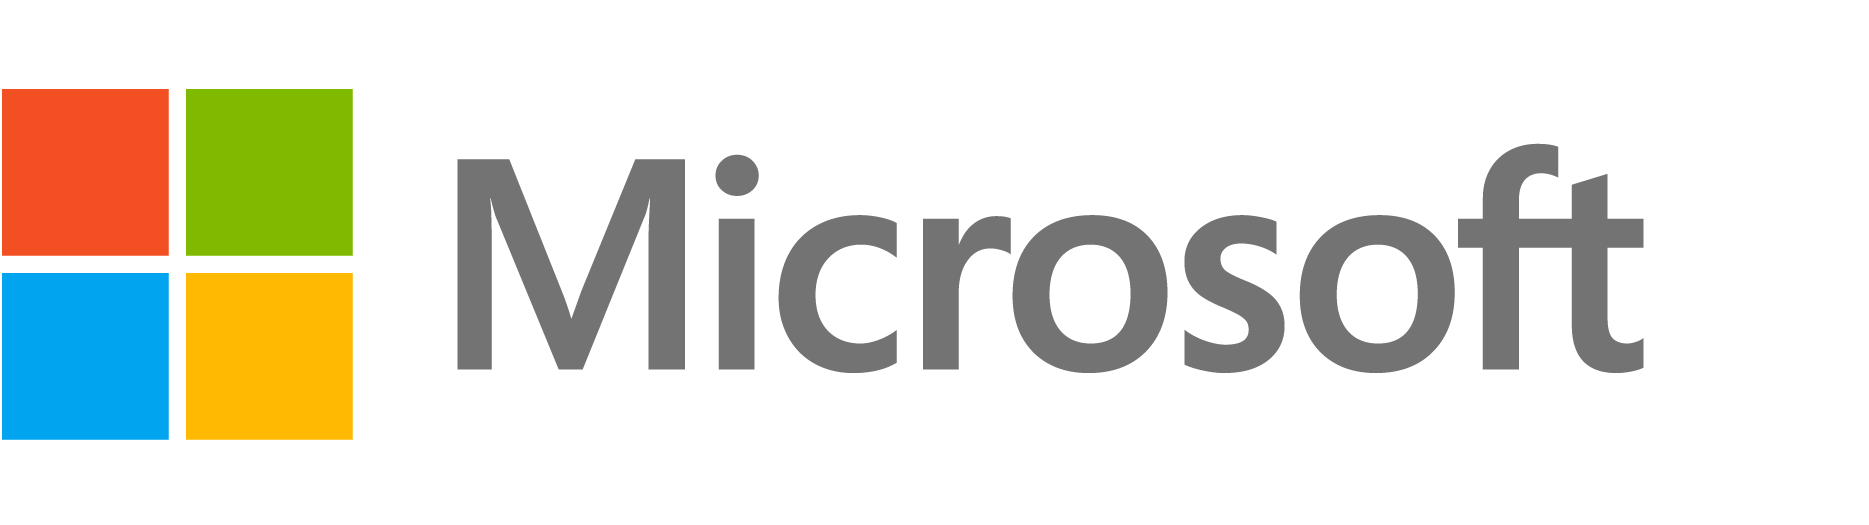 microsoft-logo-png-transparent-20.png